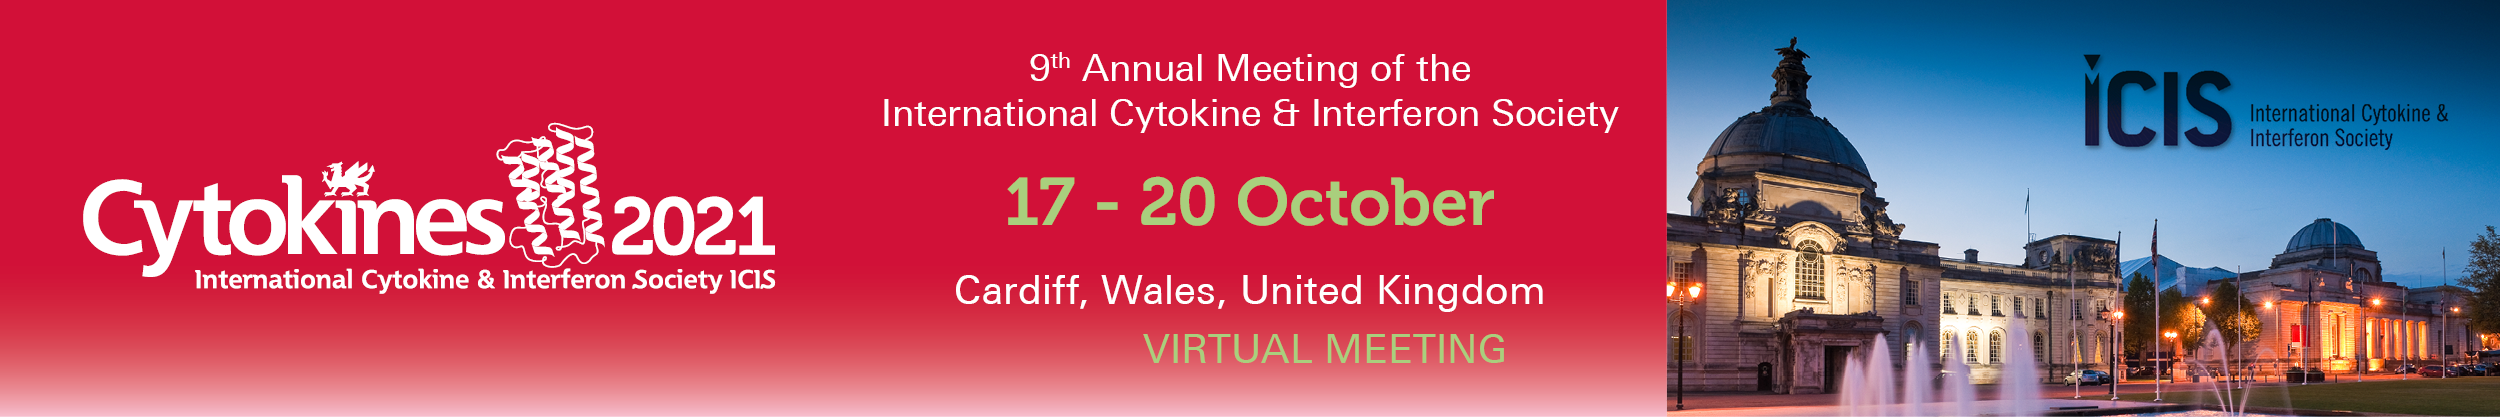 9th Annual Meeting of The International Cytokine & Interferon Society